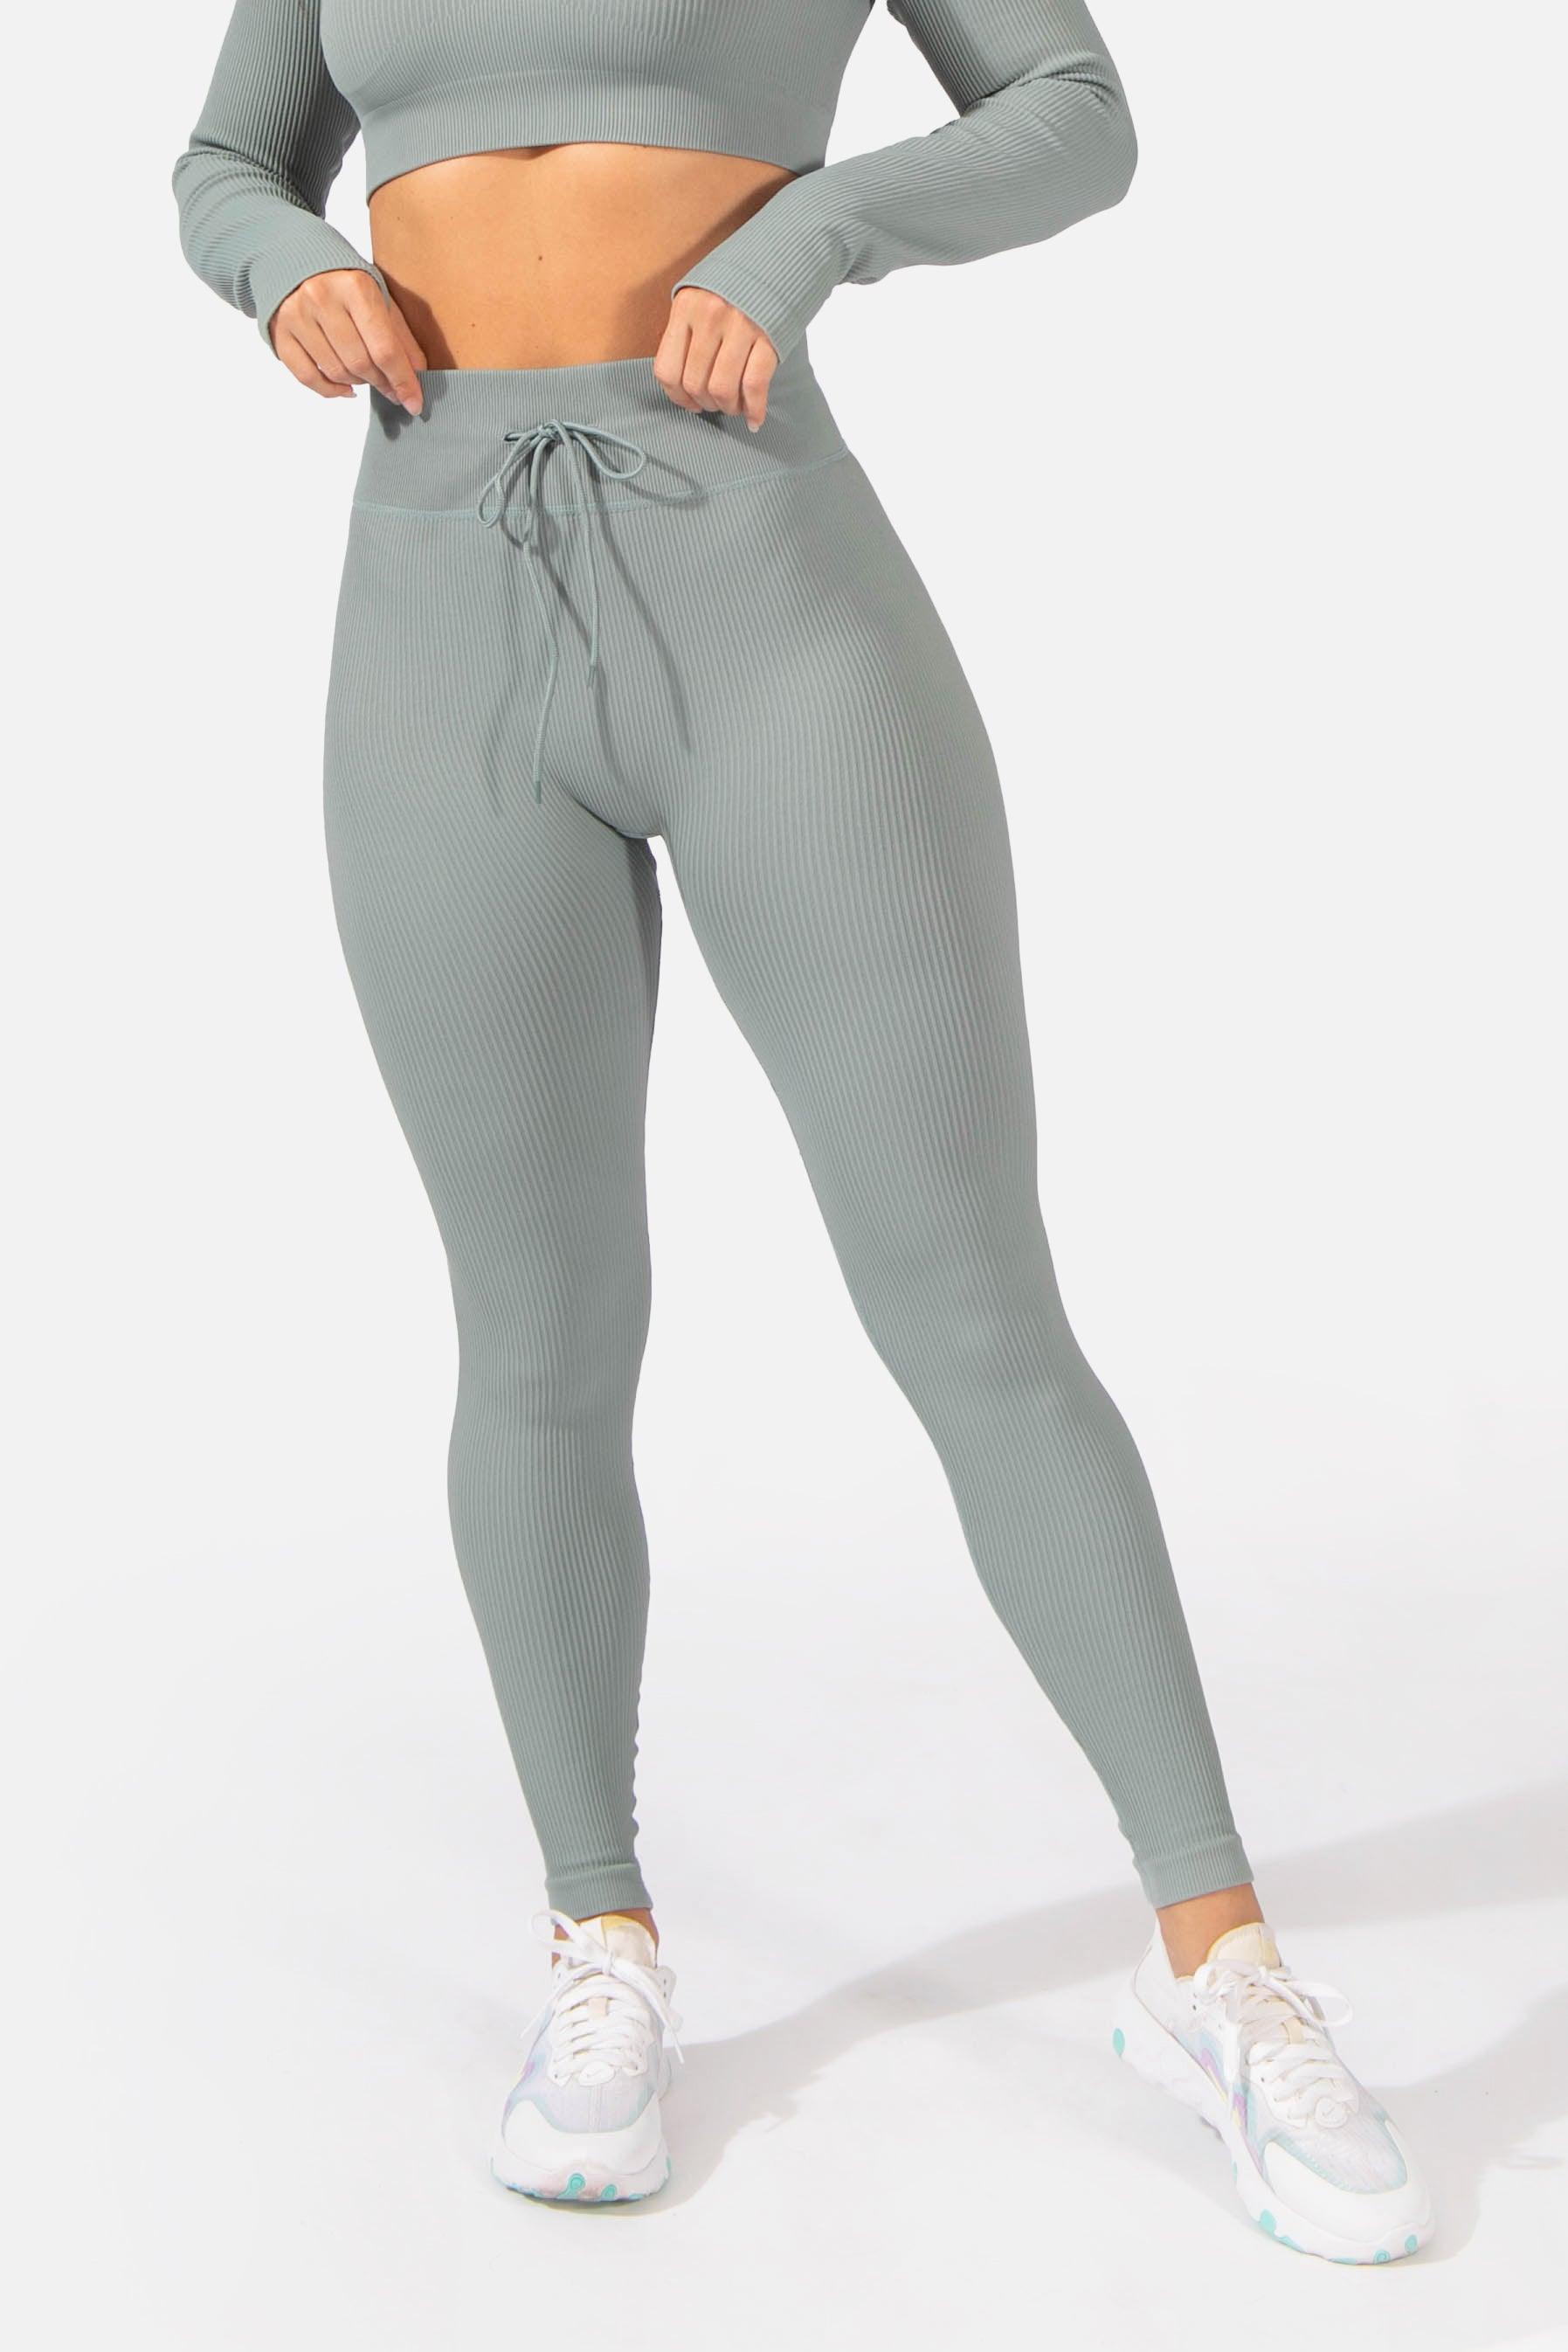  TOB Women's 2 Piece Yoga Pants Ribbed Seamless